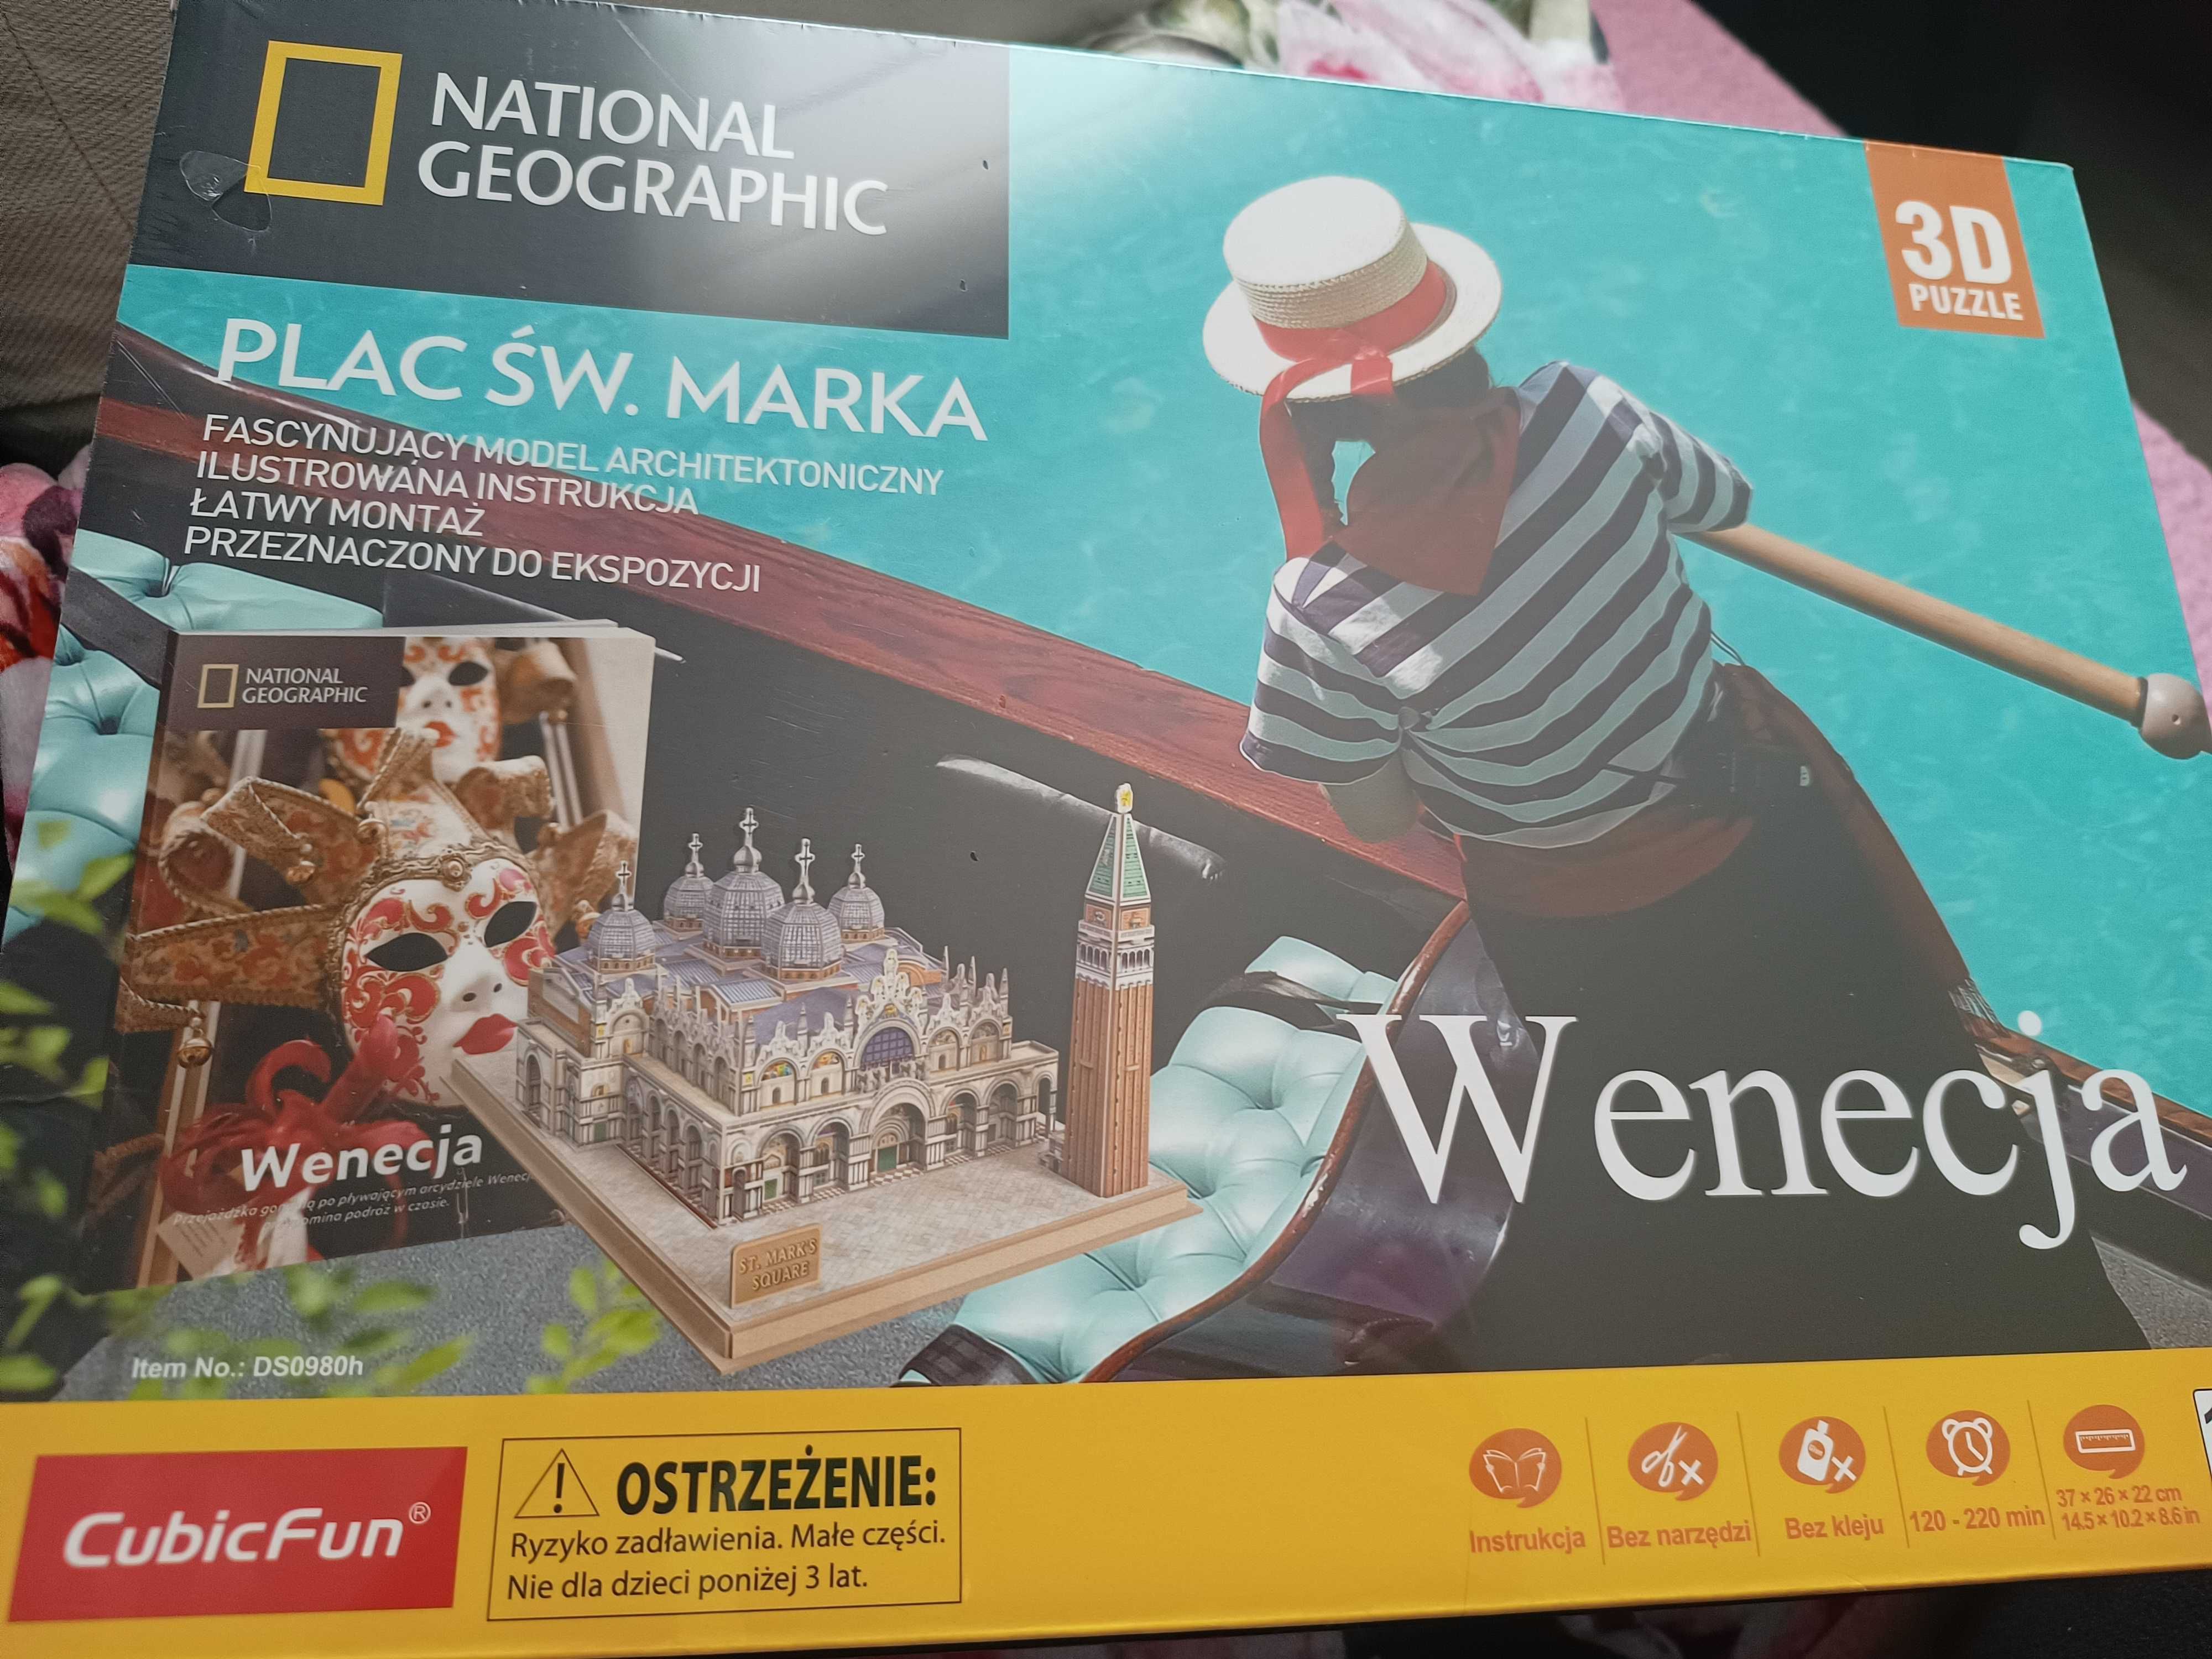 Puzzle 3D National Geographic Wenecja pl. Św. Marka